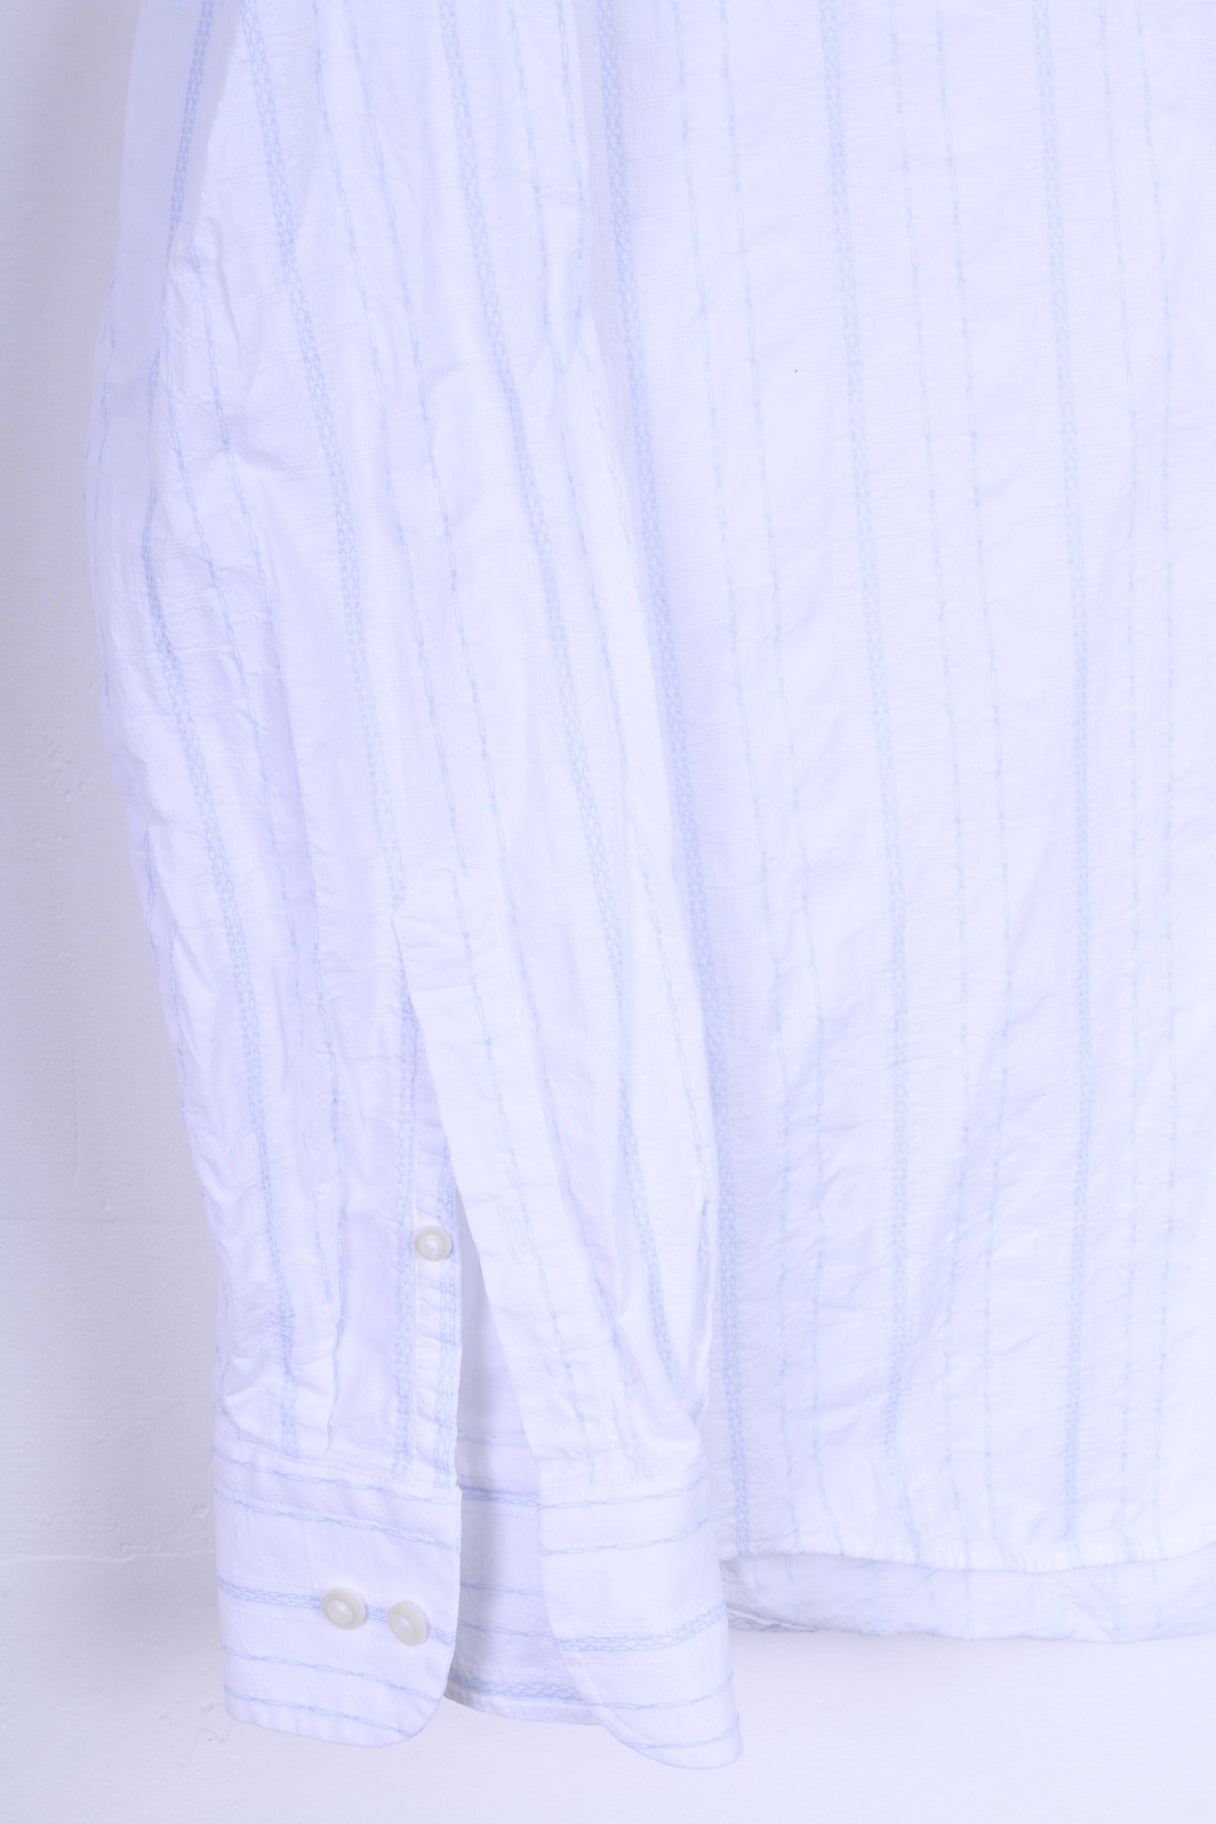 Duck And Cover Camicia casual da uomo XL (M) Manica lunga in cotone a righe bianche blu